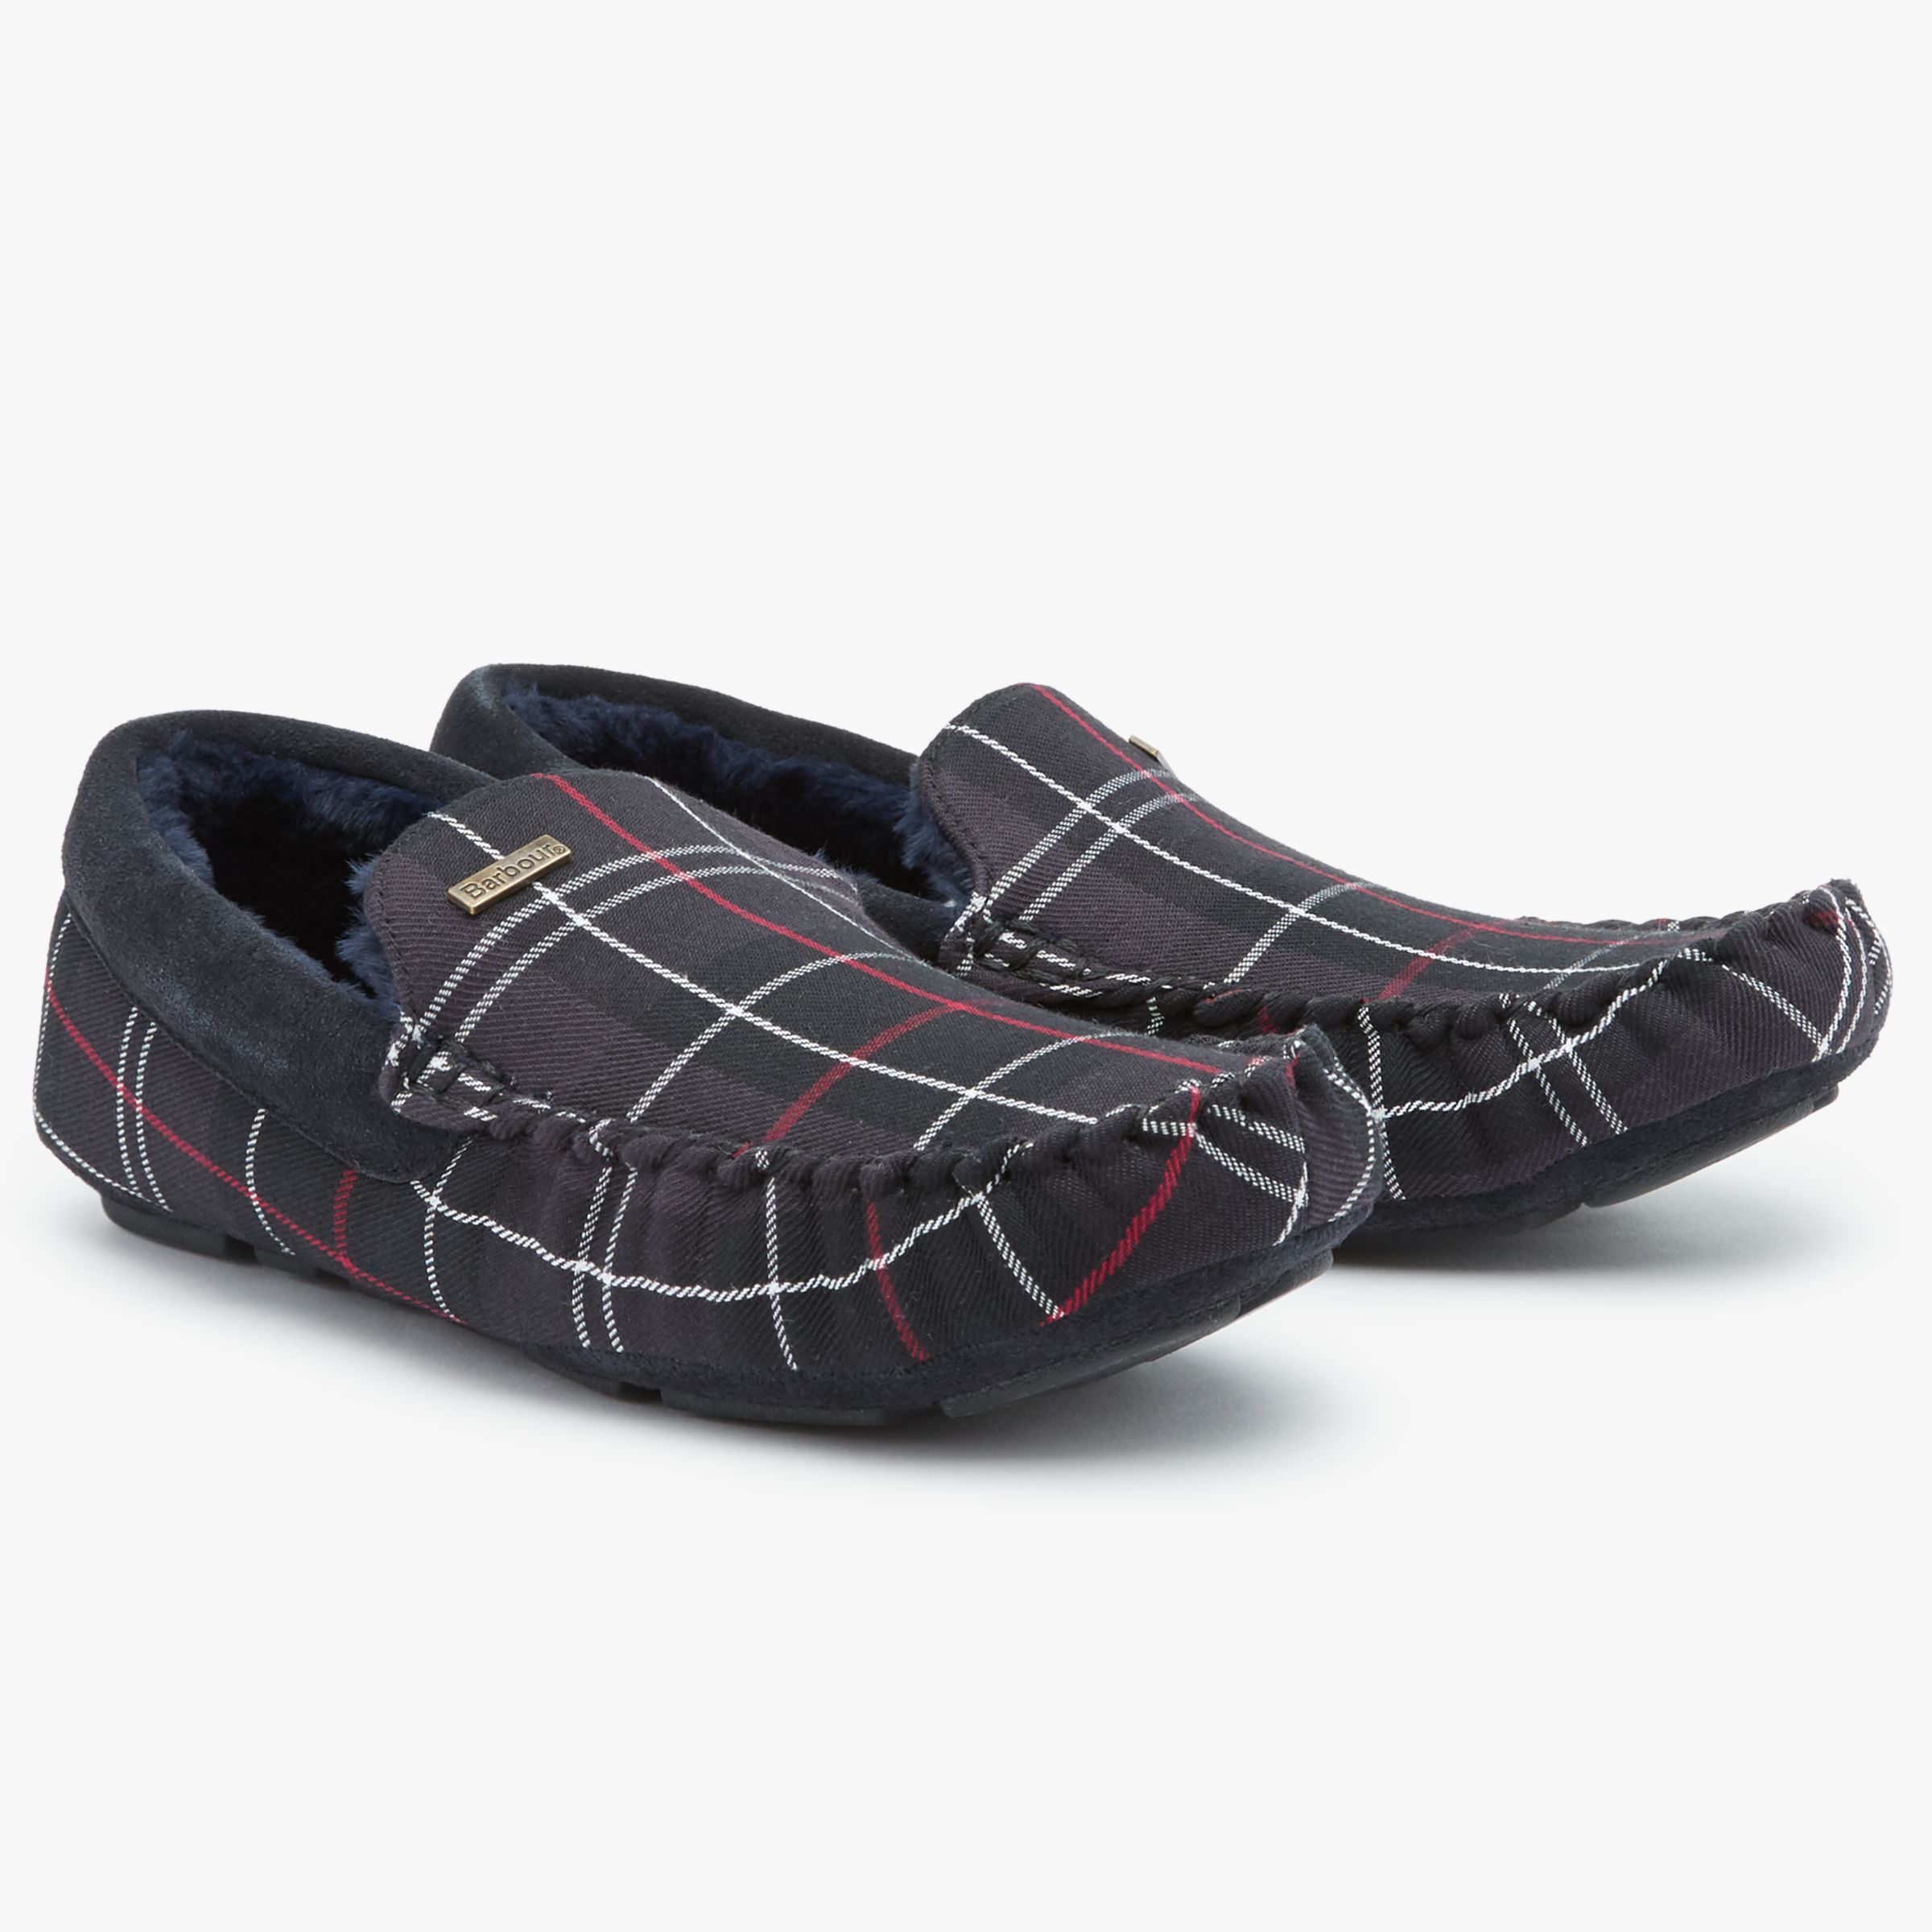 barbour tartan slippers